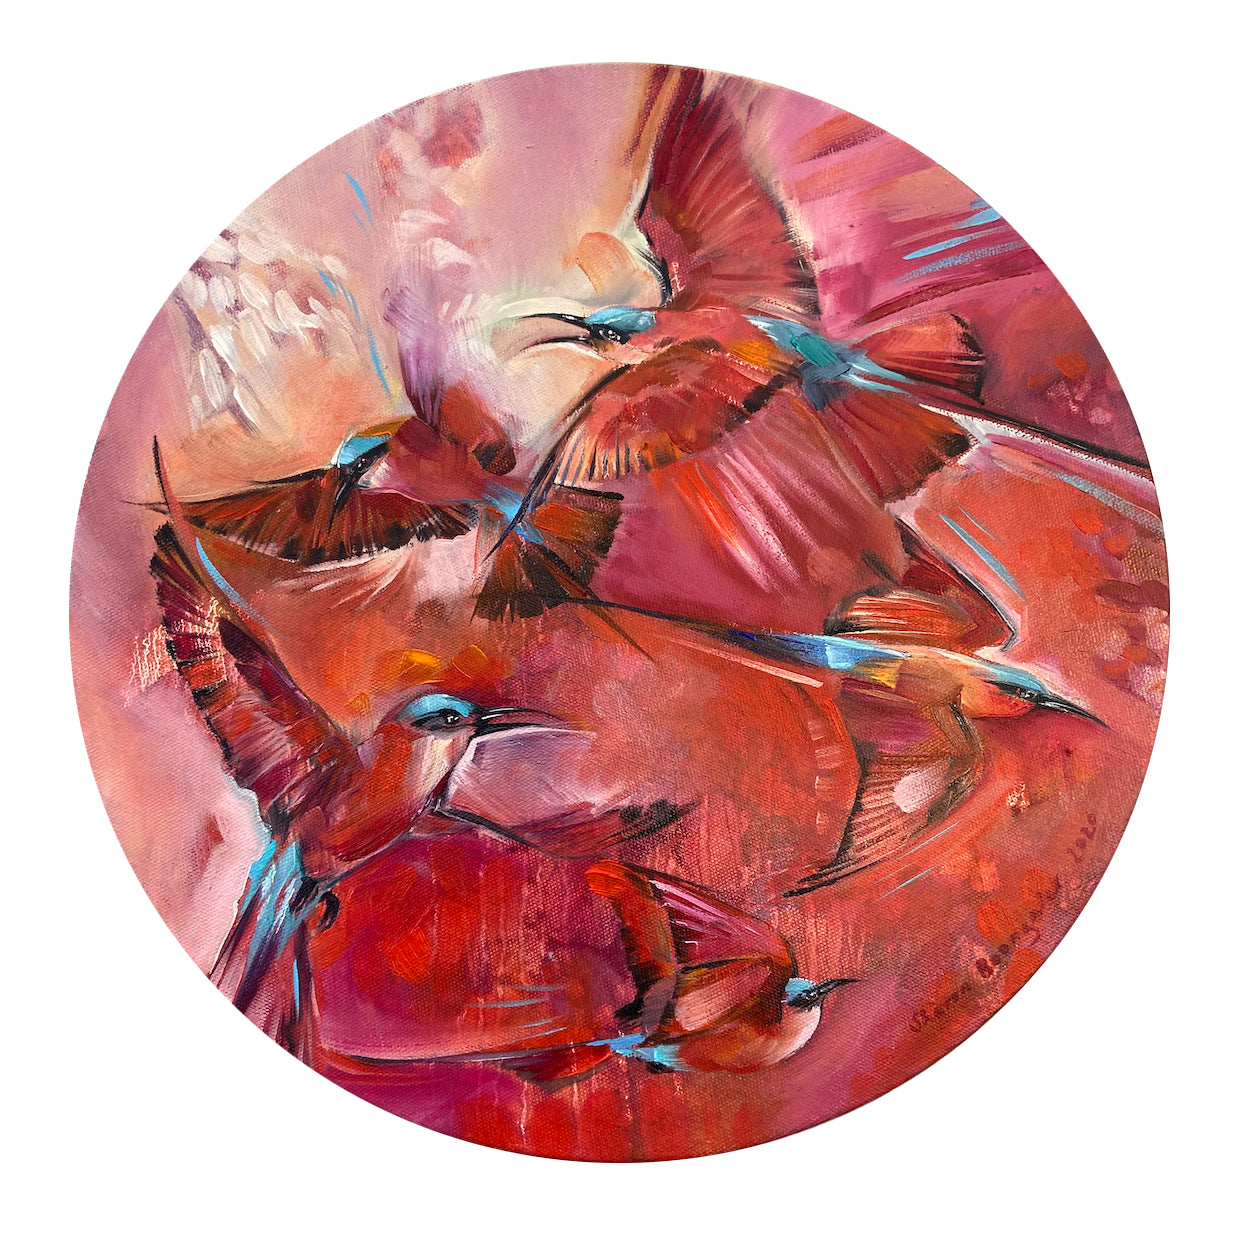 Southern Carmine Bee-eater Mini oil-on-canvas